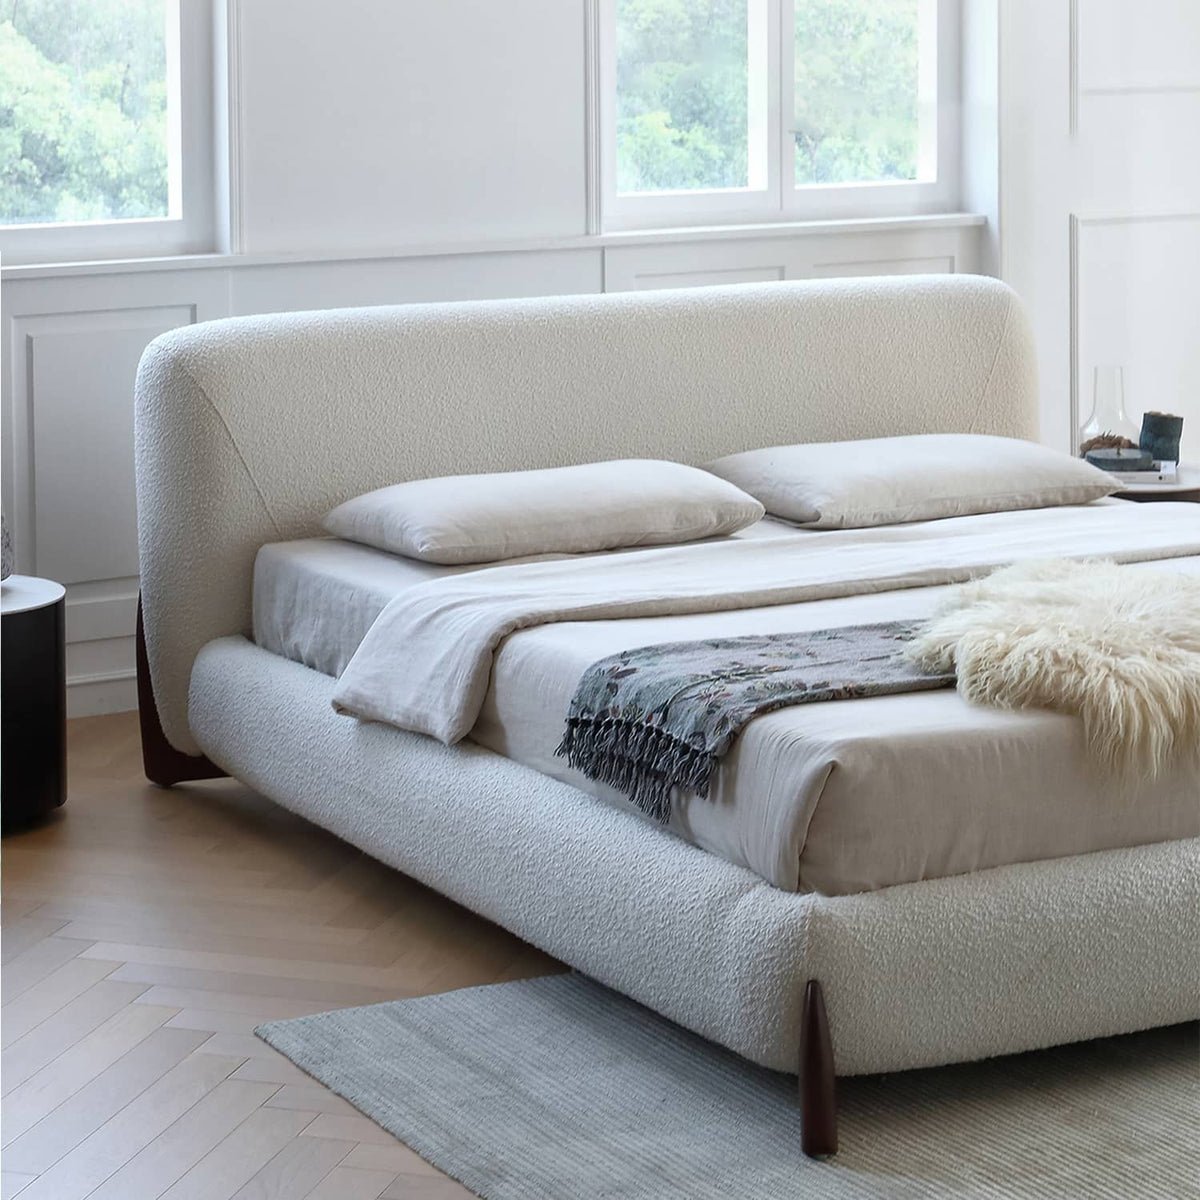 Elegant Bed Frame in White Pine & Ash Wood - Premium Quality and Craftsmanship my-375